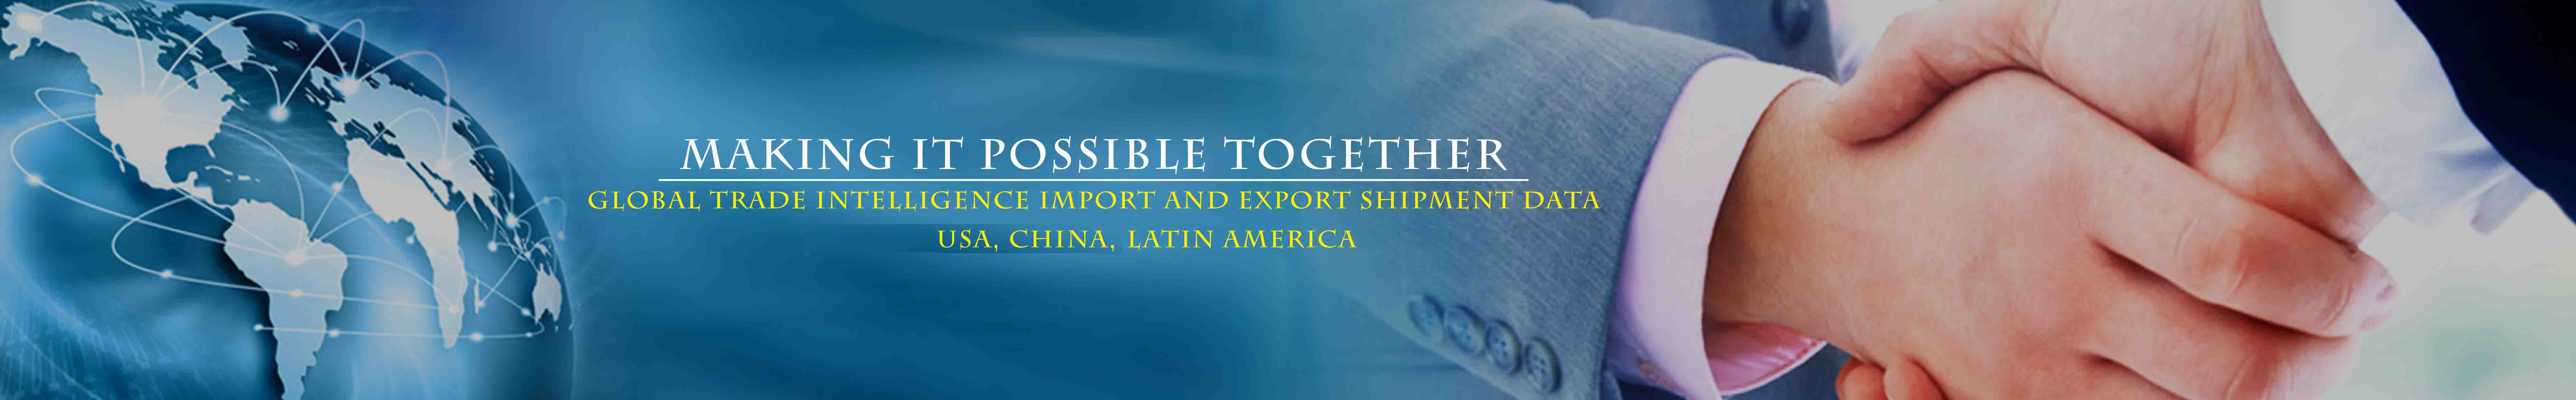 Export shipment data of India banner4